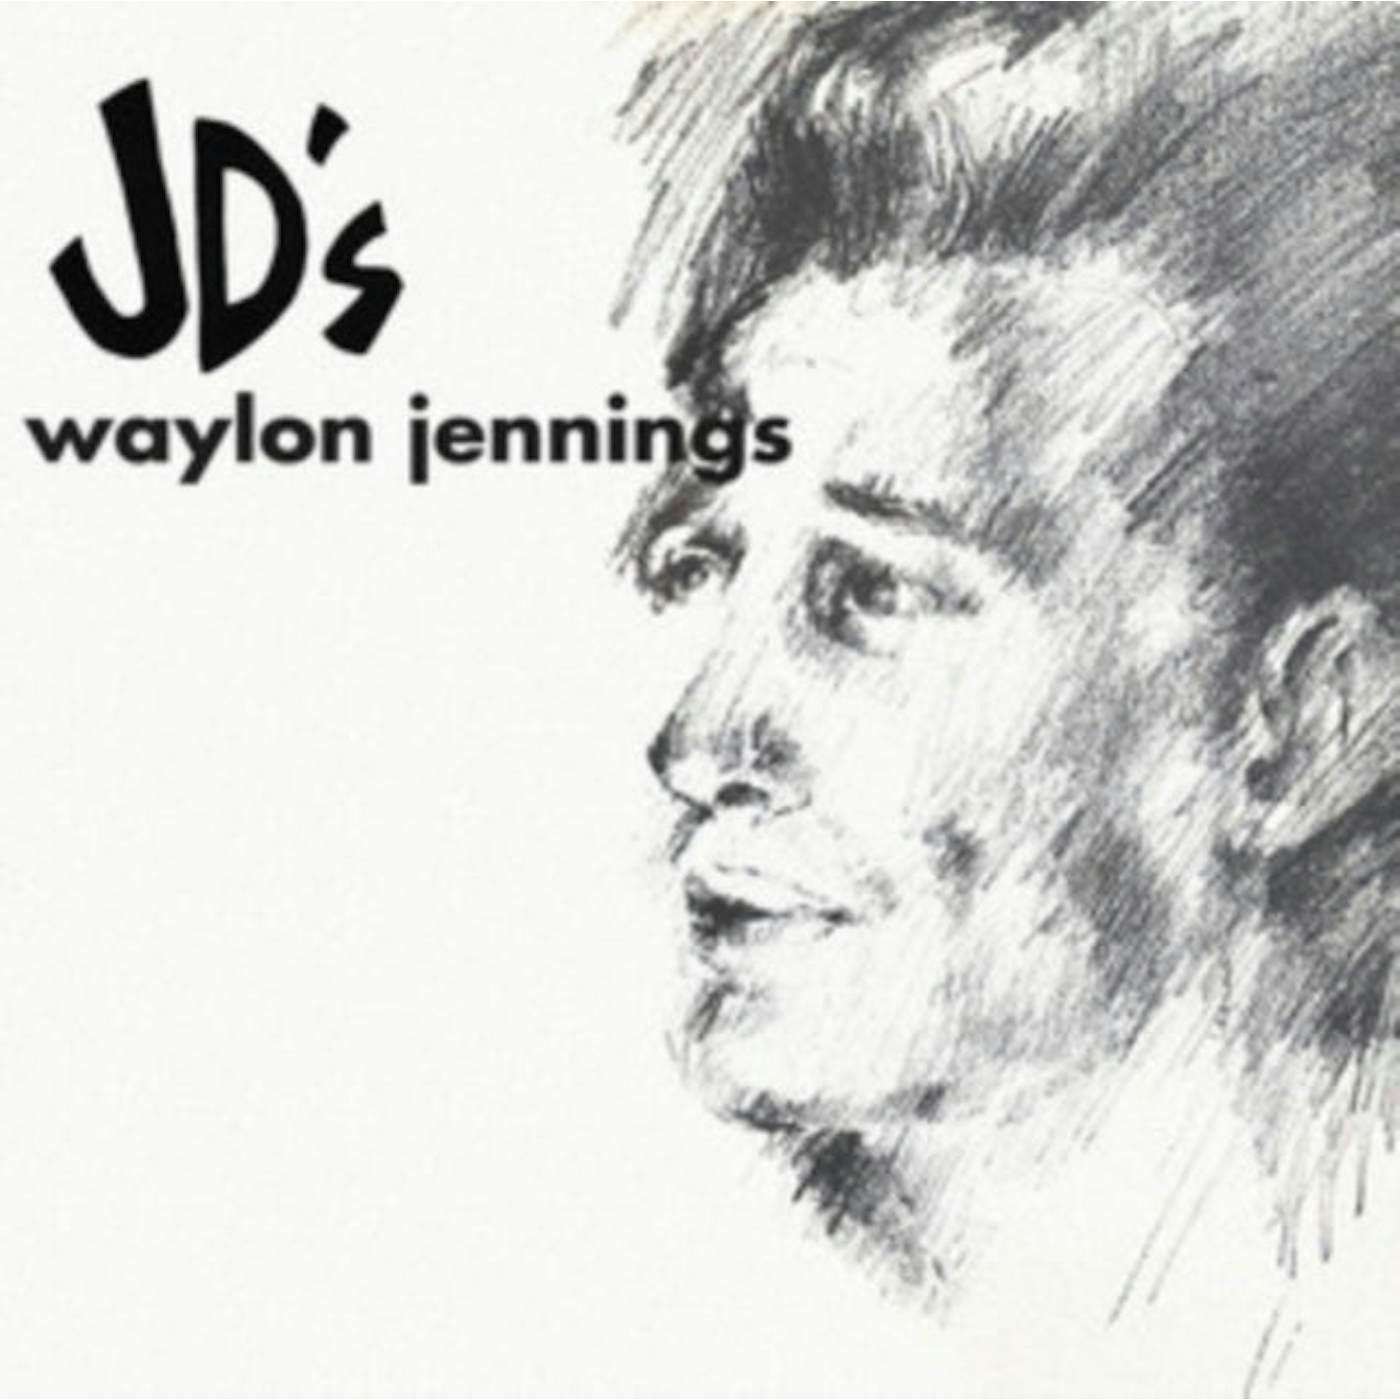 Waylon Jennings LP - Jds (Vinyl)